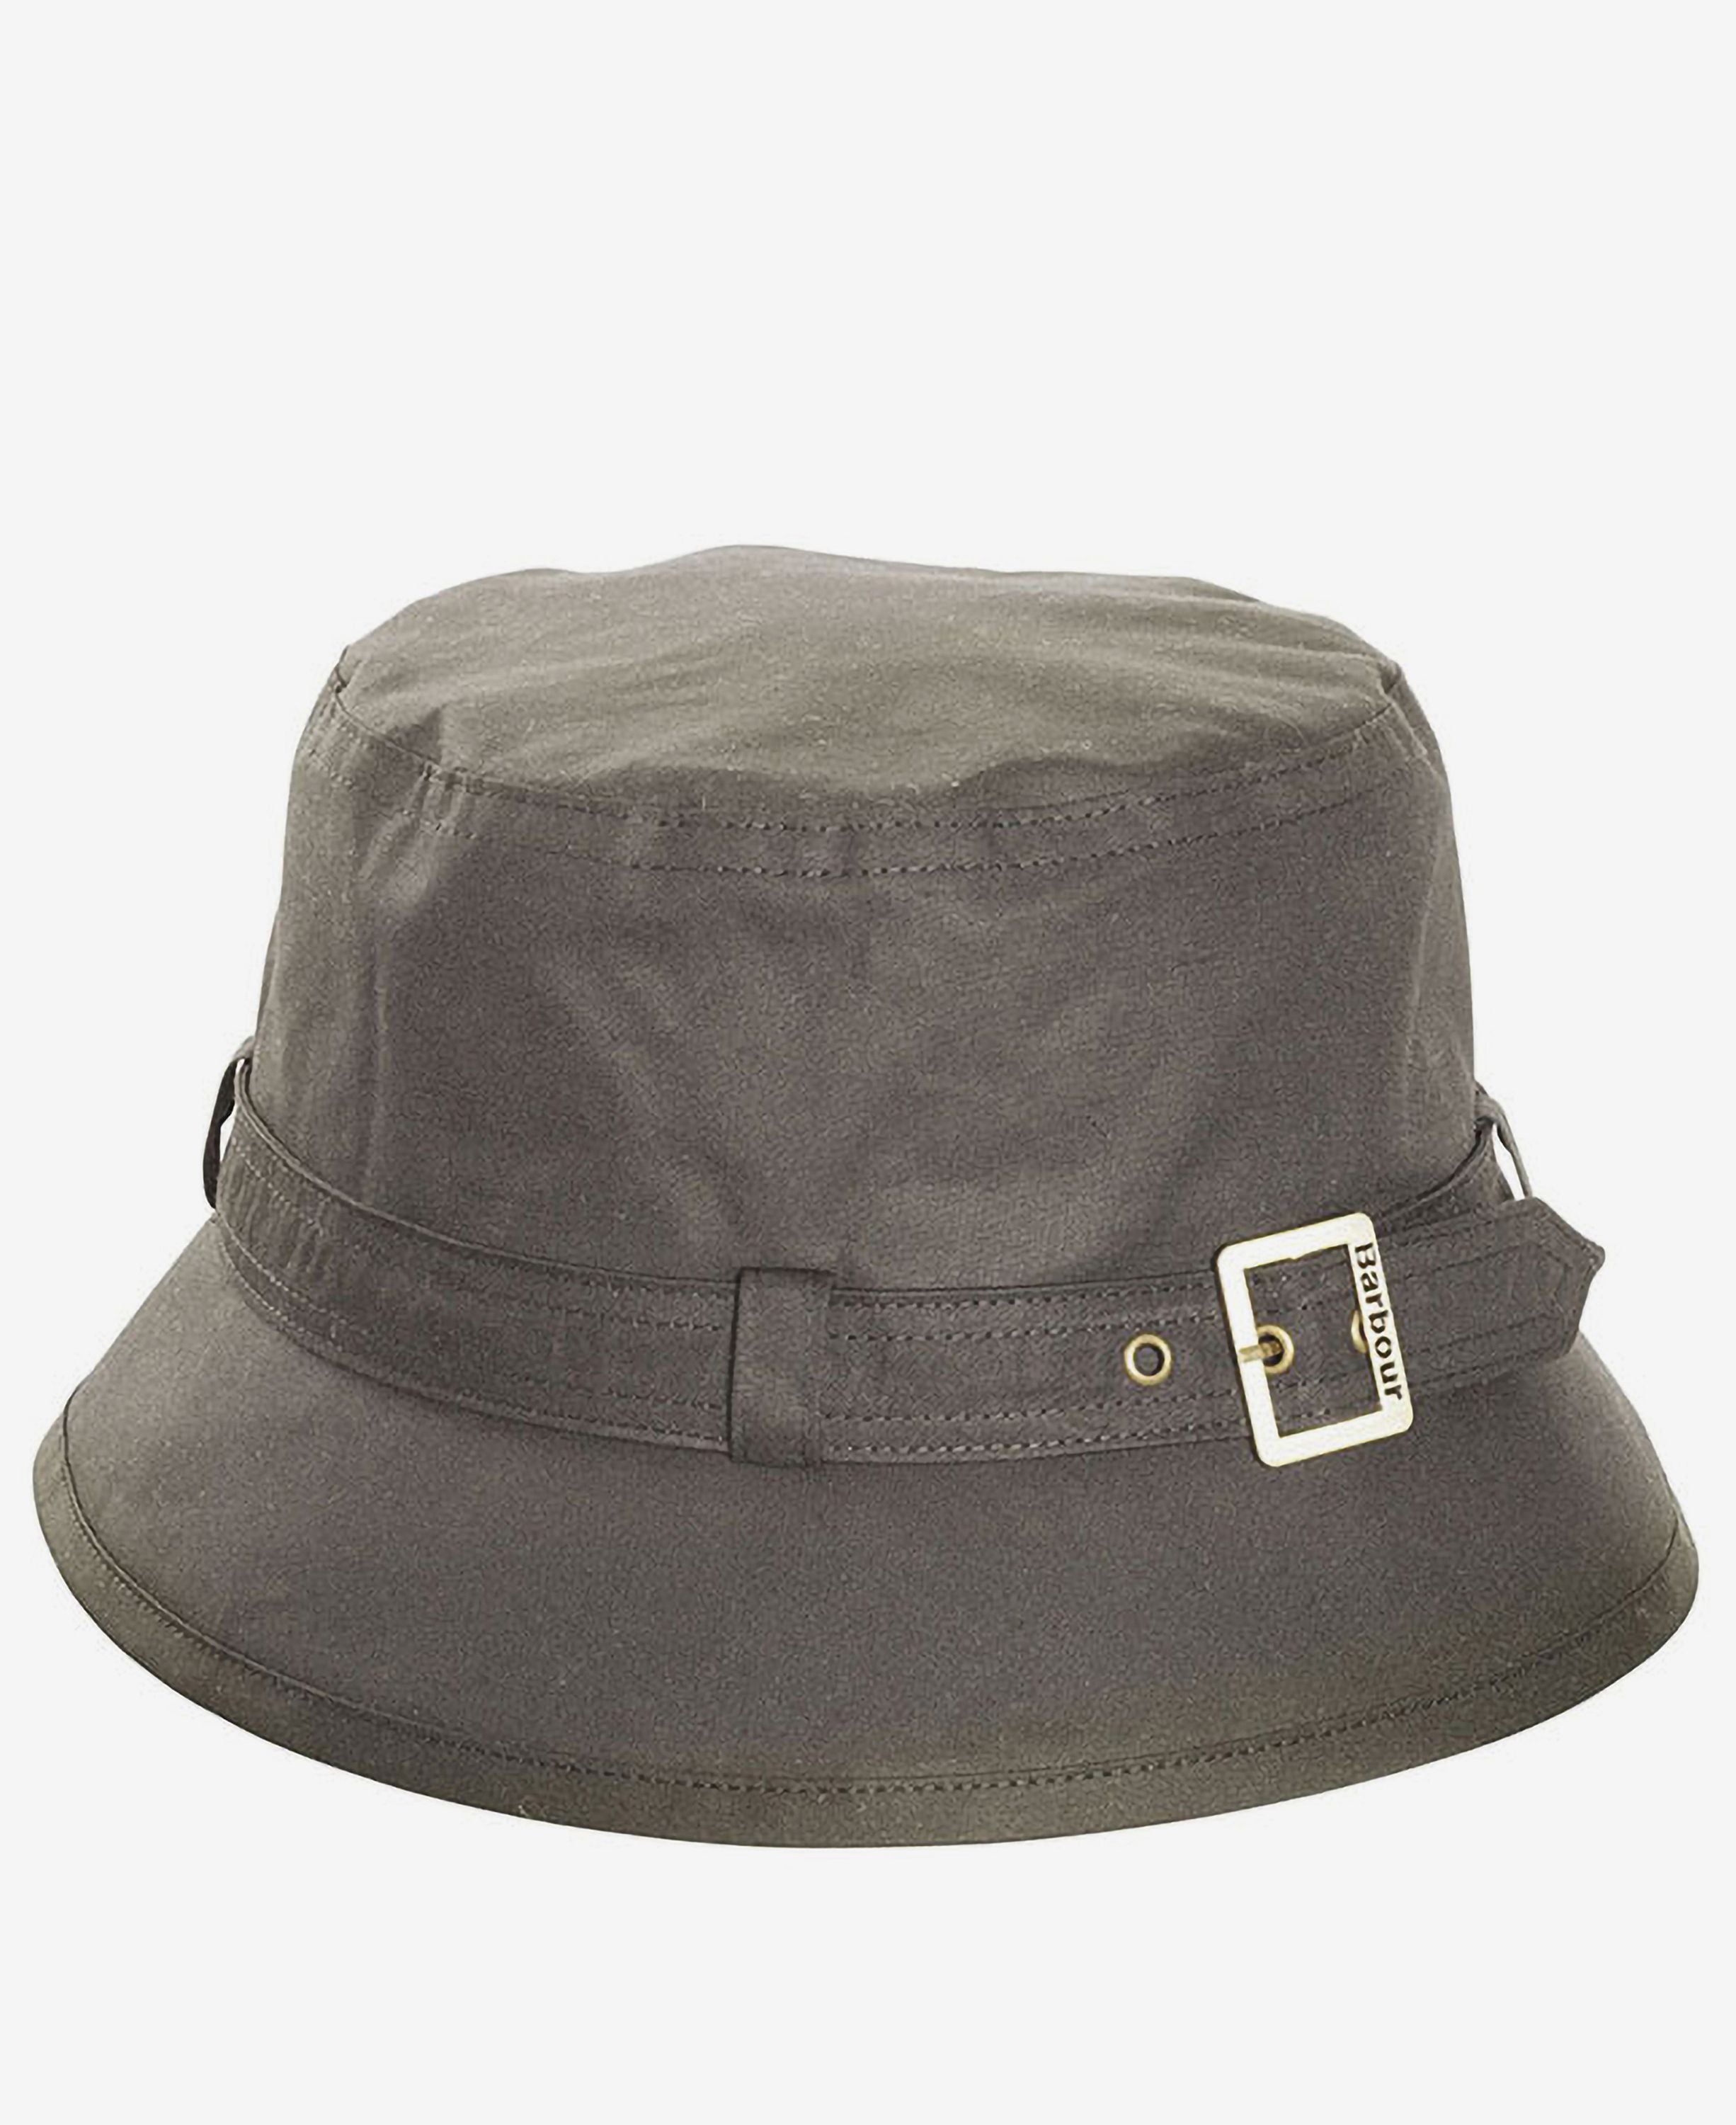 Kelso Wax Belted Women's Hat - Olive